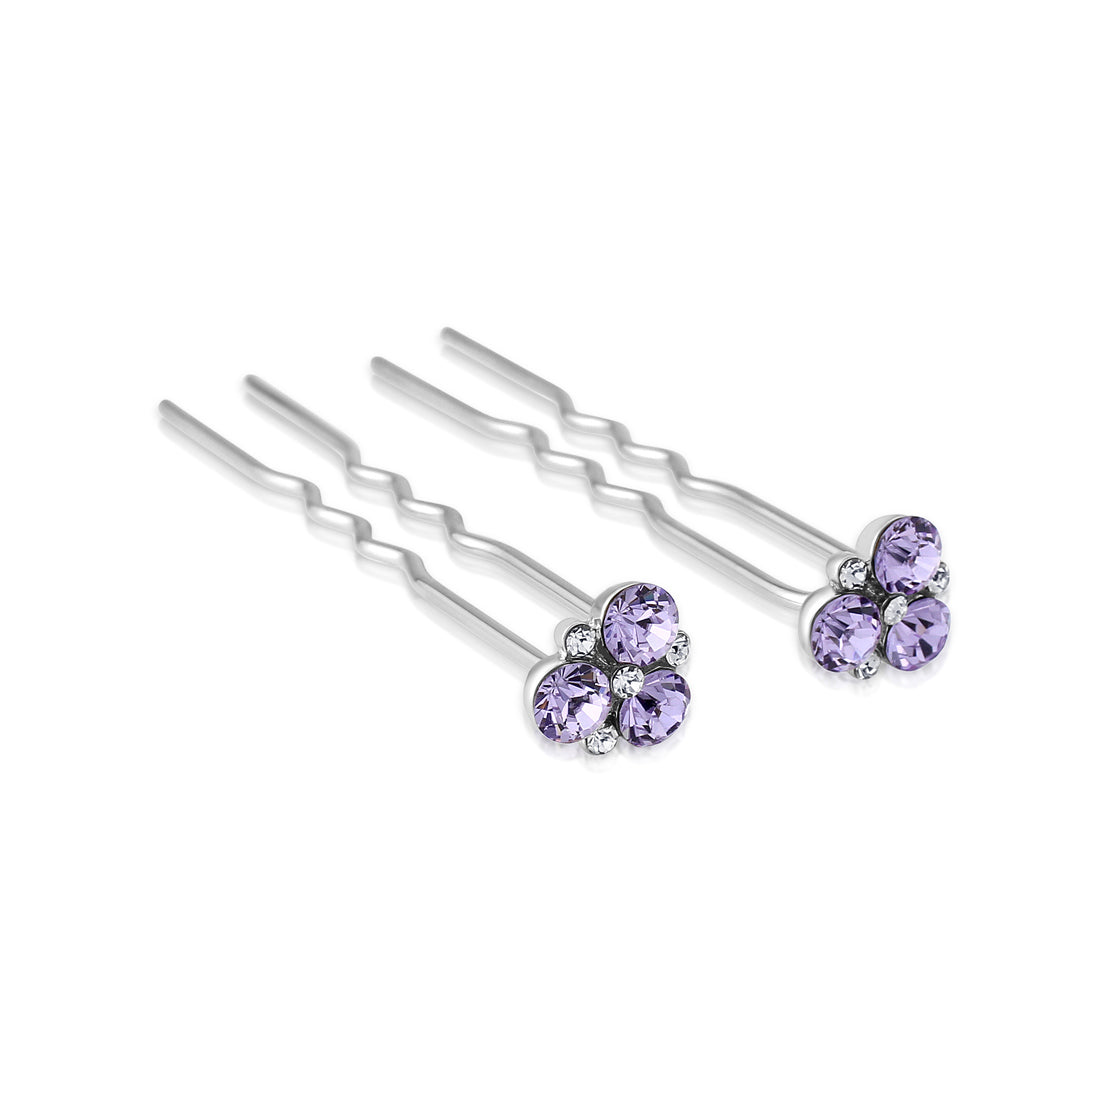 Allure of Lavender Crystal Cluster Hair Pins